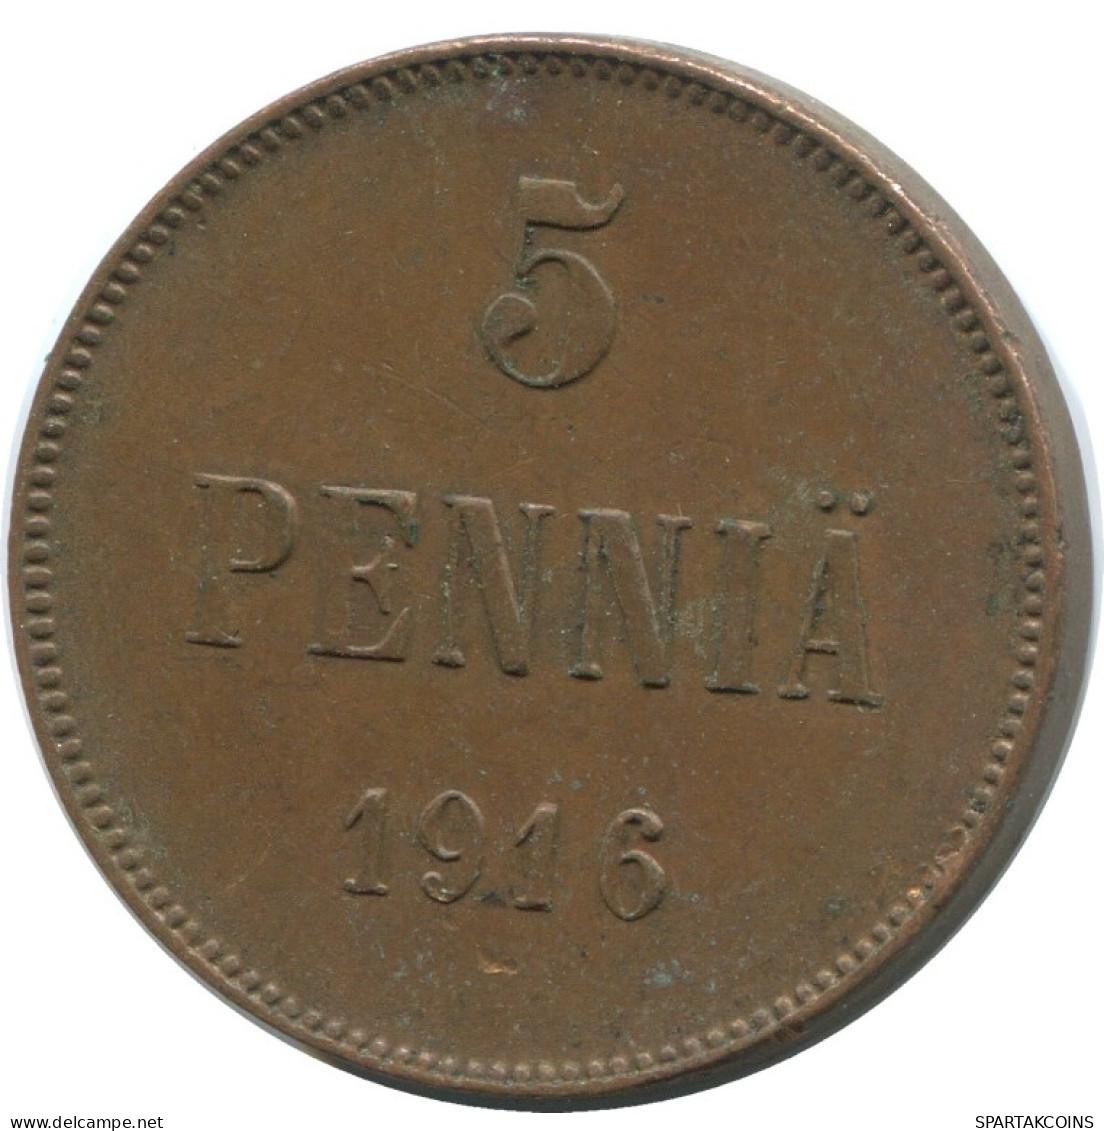 5 PENNIA 1916 FINLAND Coin RUSSIA EMPIRE #AB174.5.U.A - Finnland